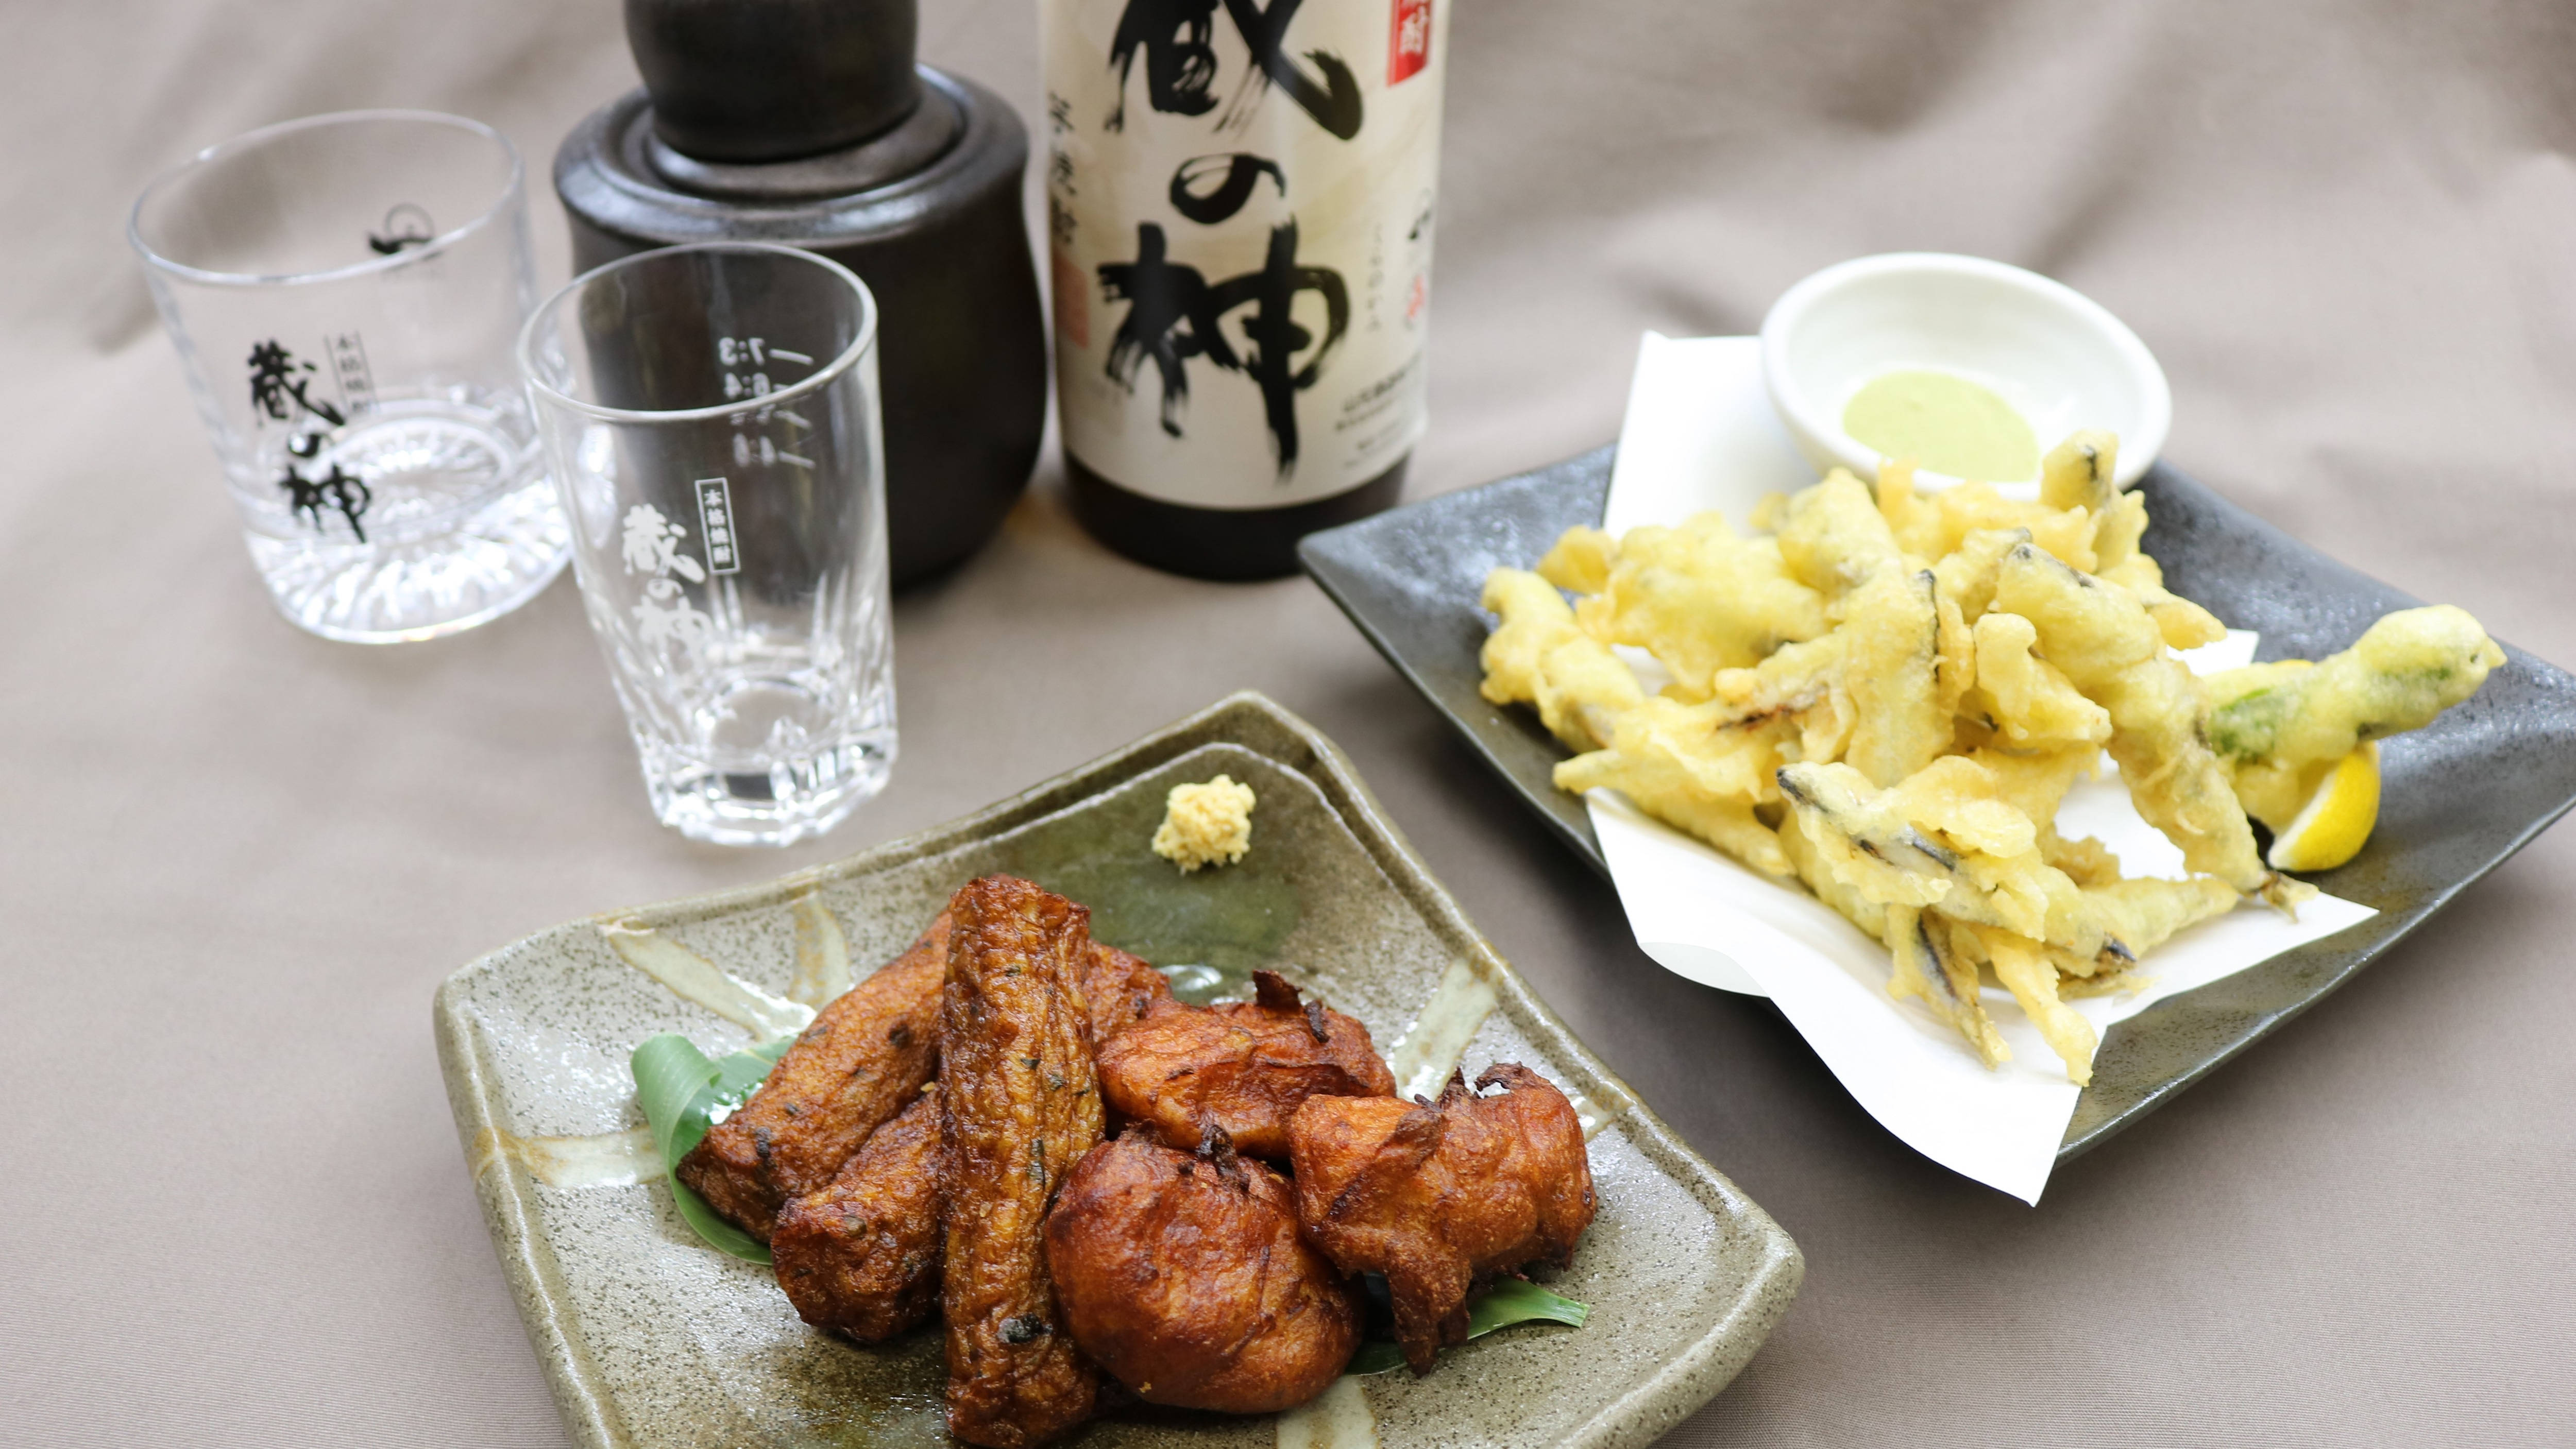 Restoran makan malam "Hanabatei" Kami juga memiliki banyak shochu, makanan ringan, dan hidangan tunggal.